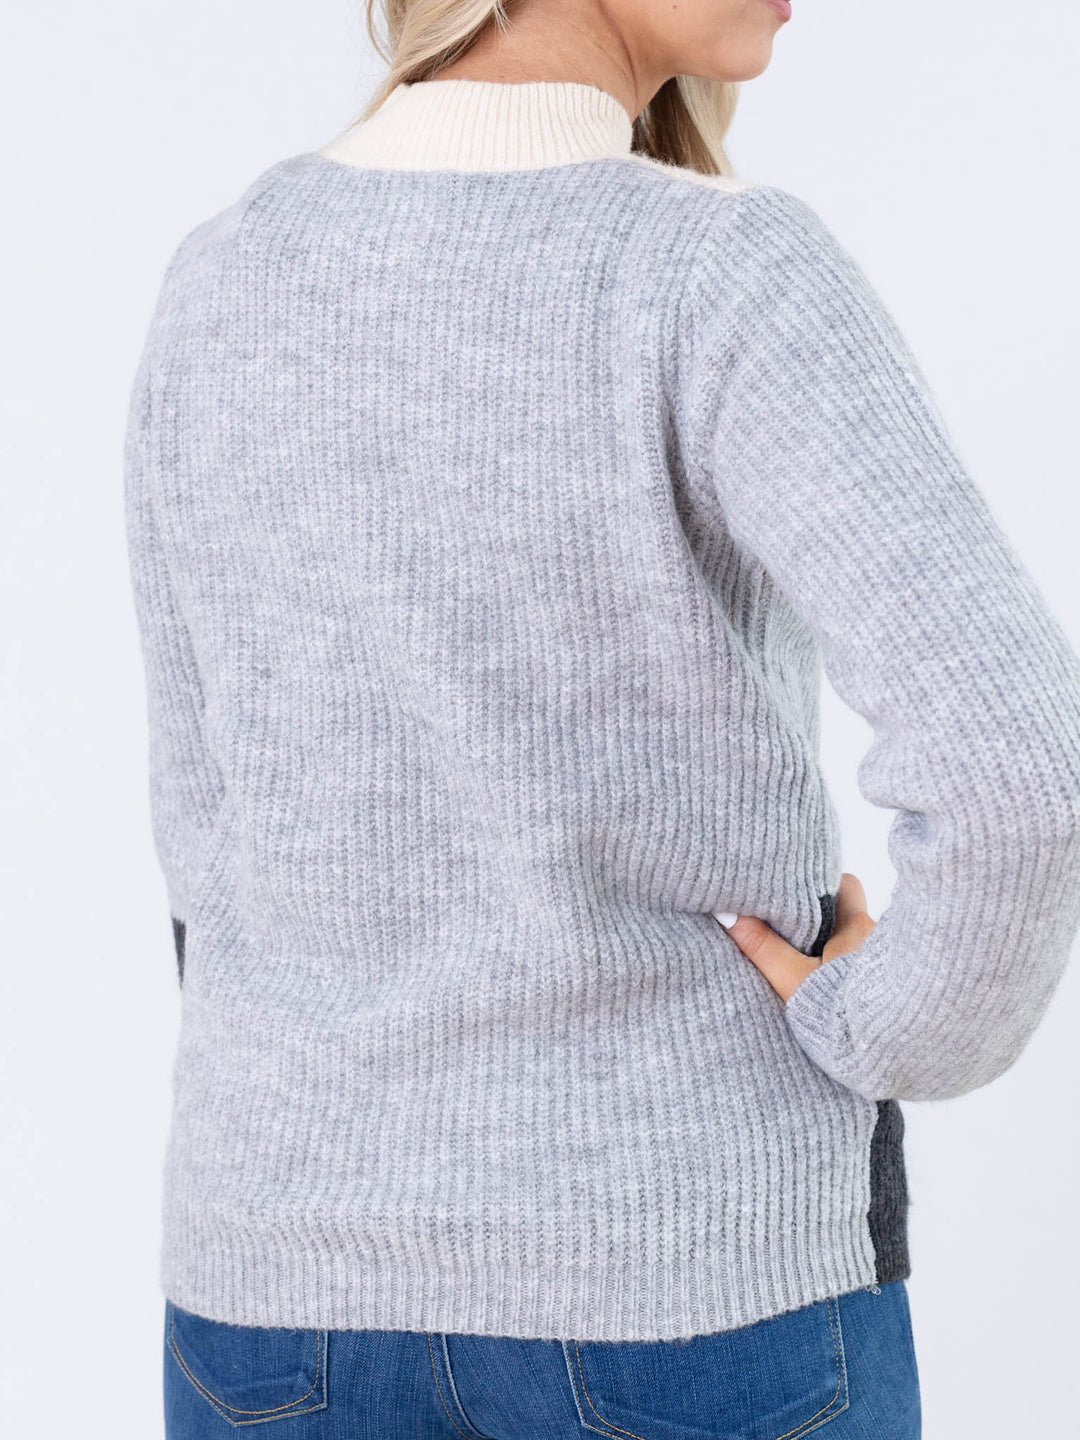 neutral pattern sweater